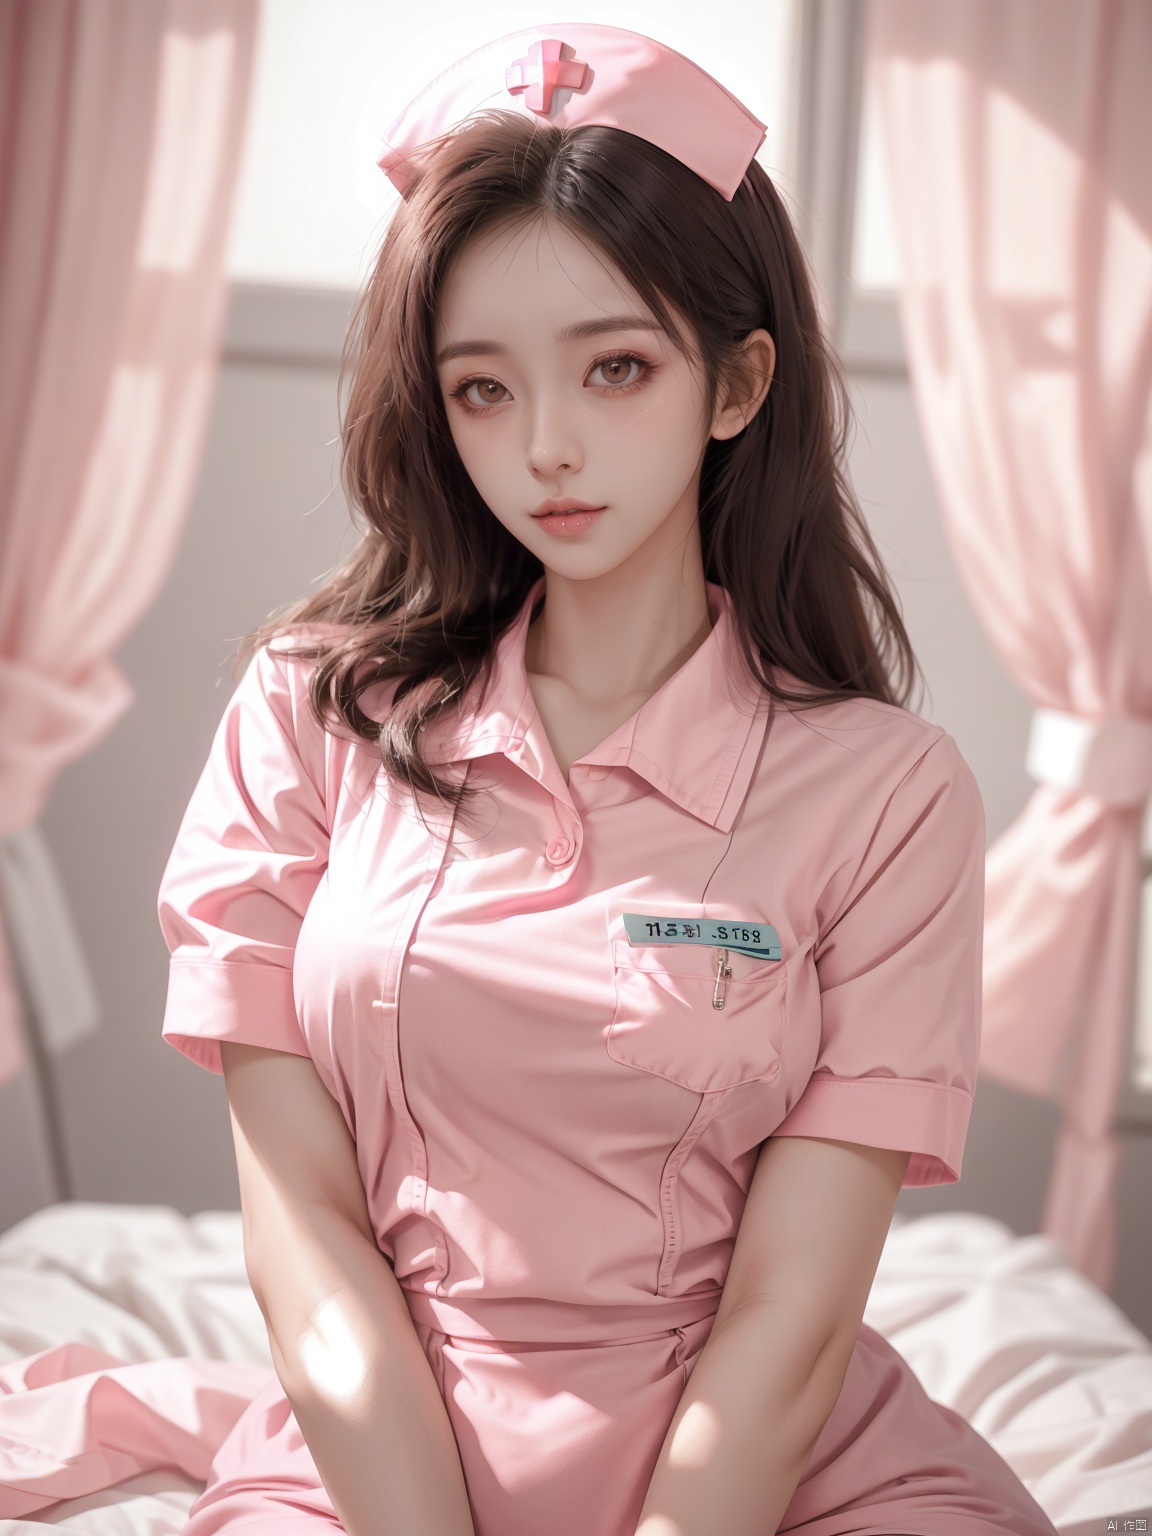  masterpiece, 1 girl, Lovely, Sweet, Long hair, nurse, looking at viewer, pink dress, Pink nurse's uniform, realistic, textured skin, super detail, best quality,